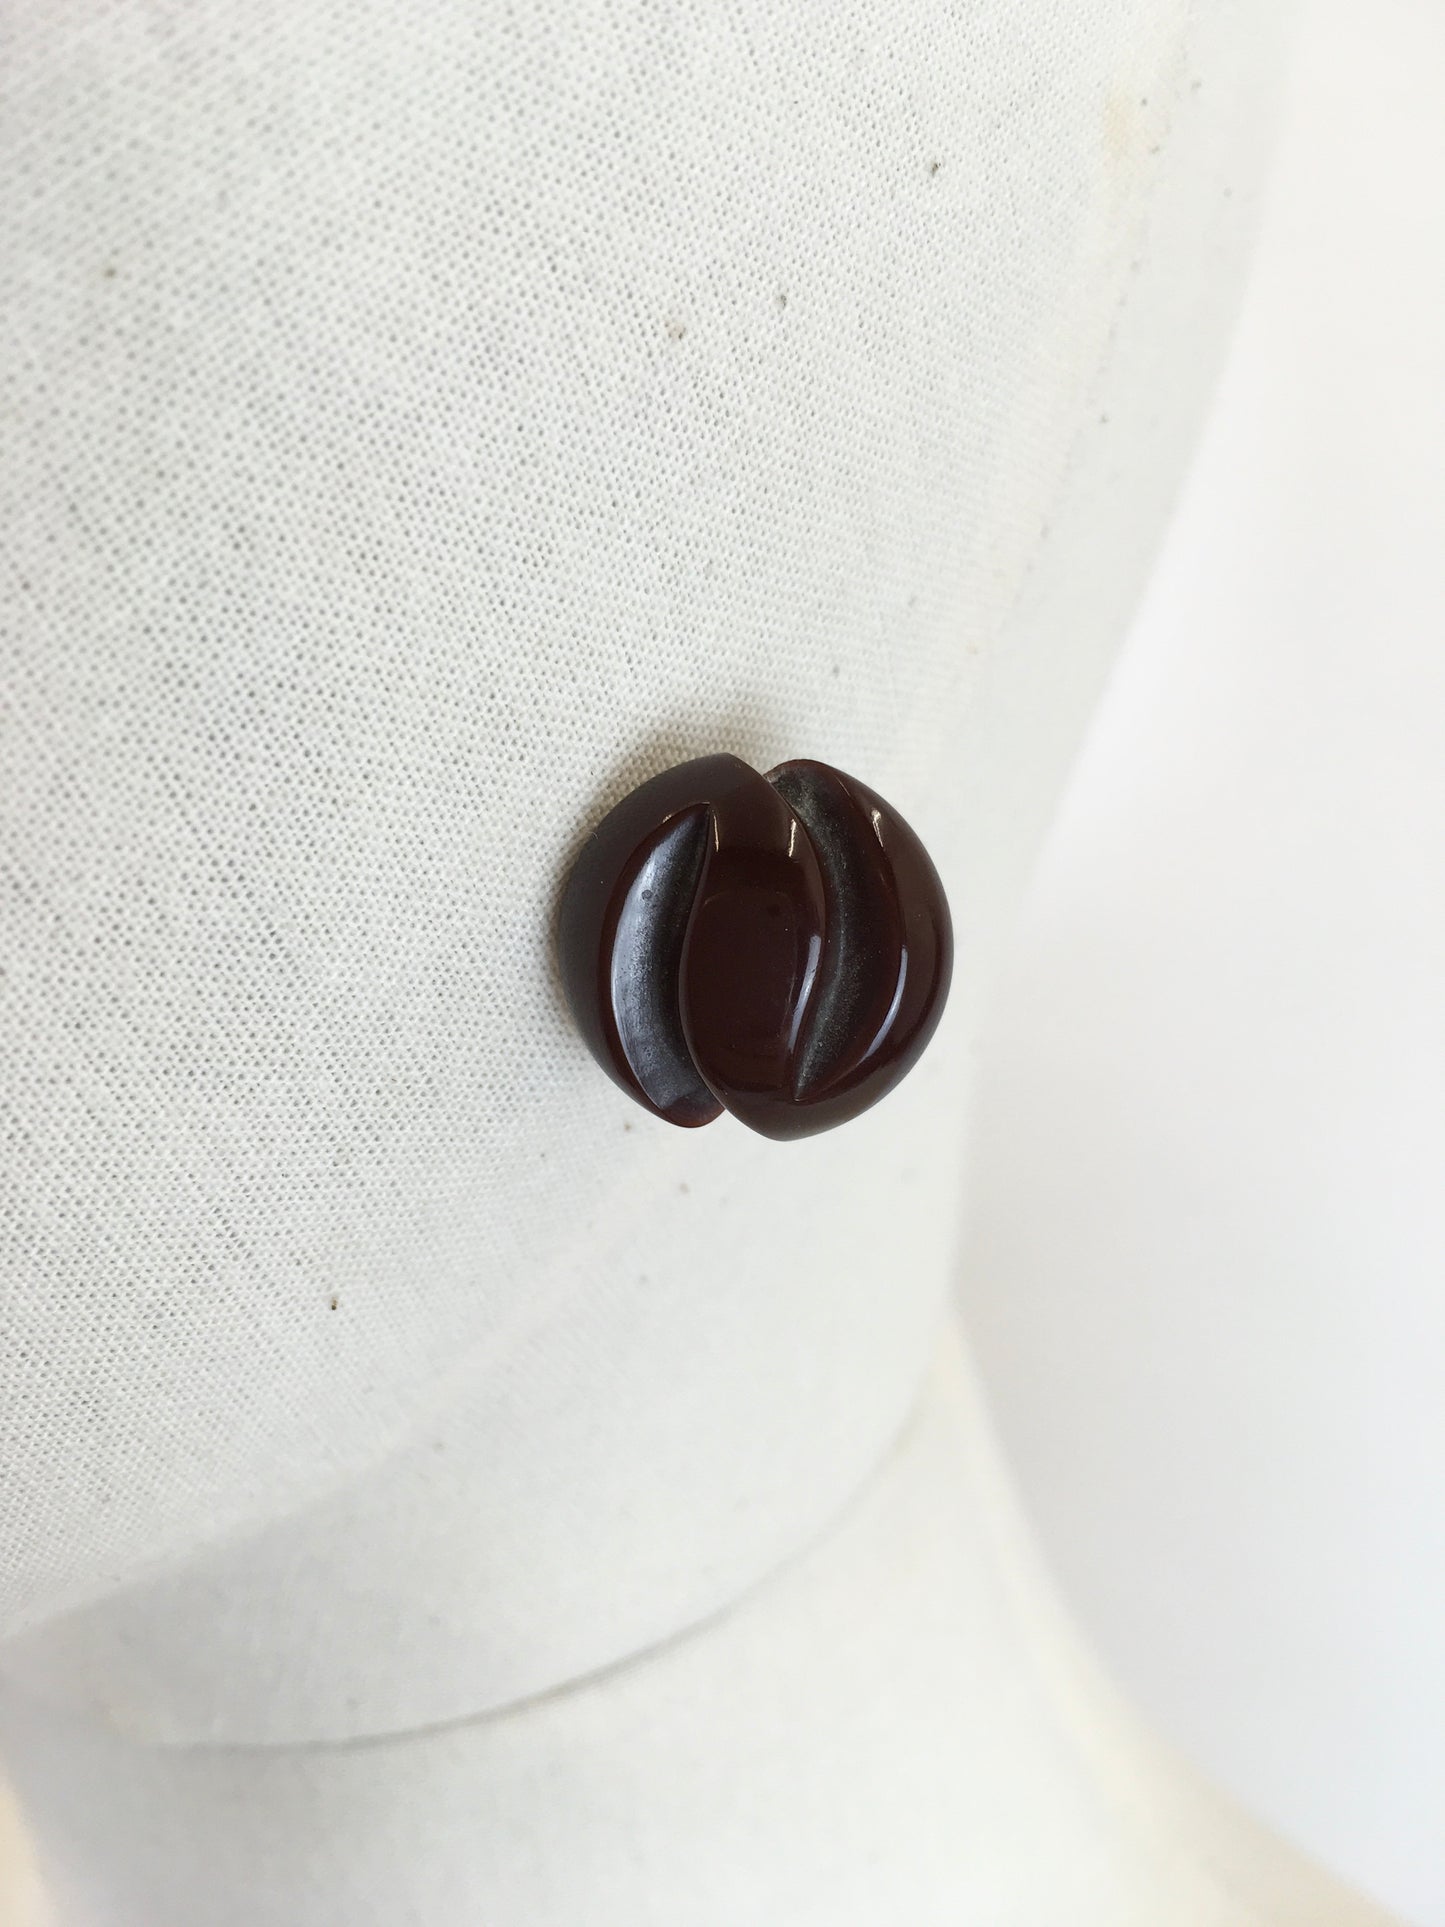 Original 1940’s Stunning Carved Bakelite Screw back Earrings - In A Lovely Autumnal Brown